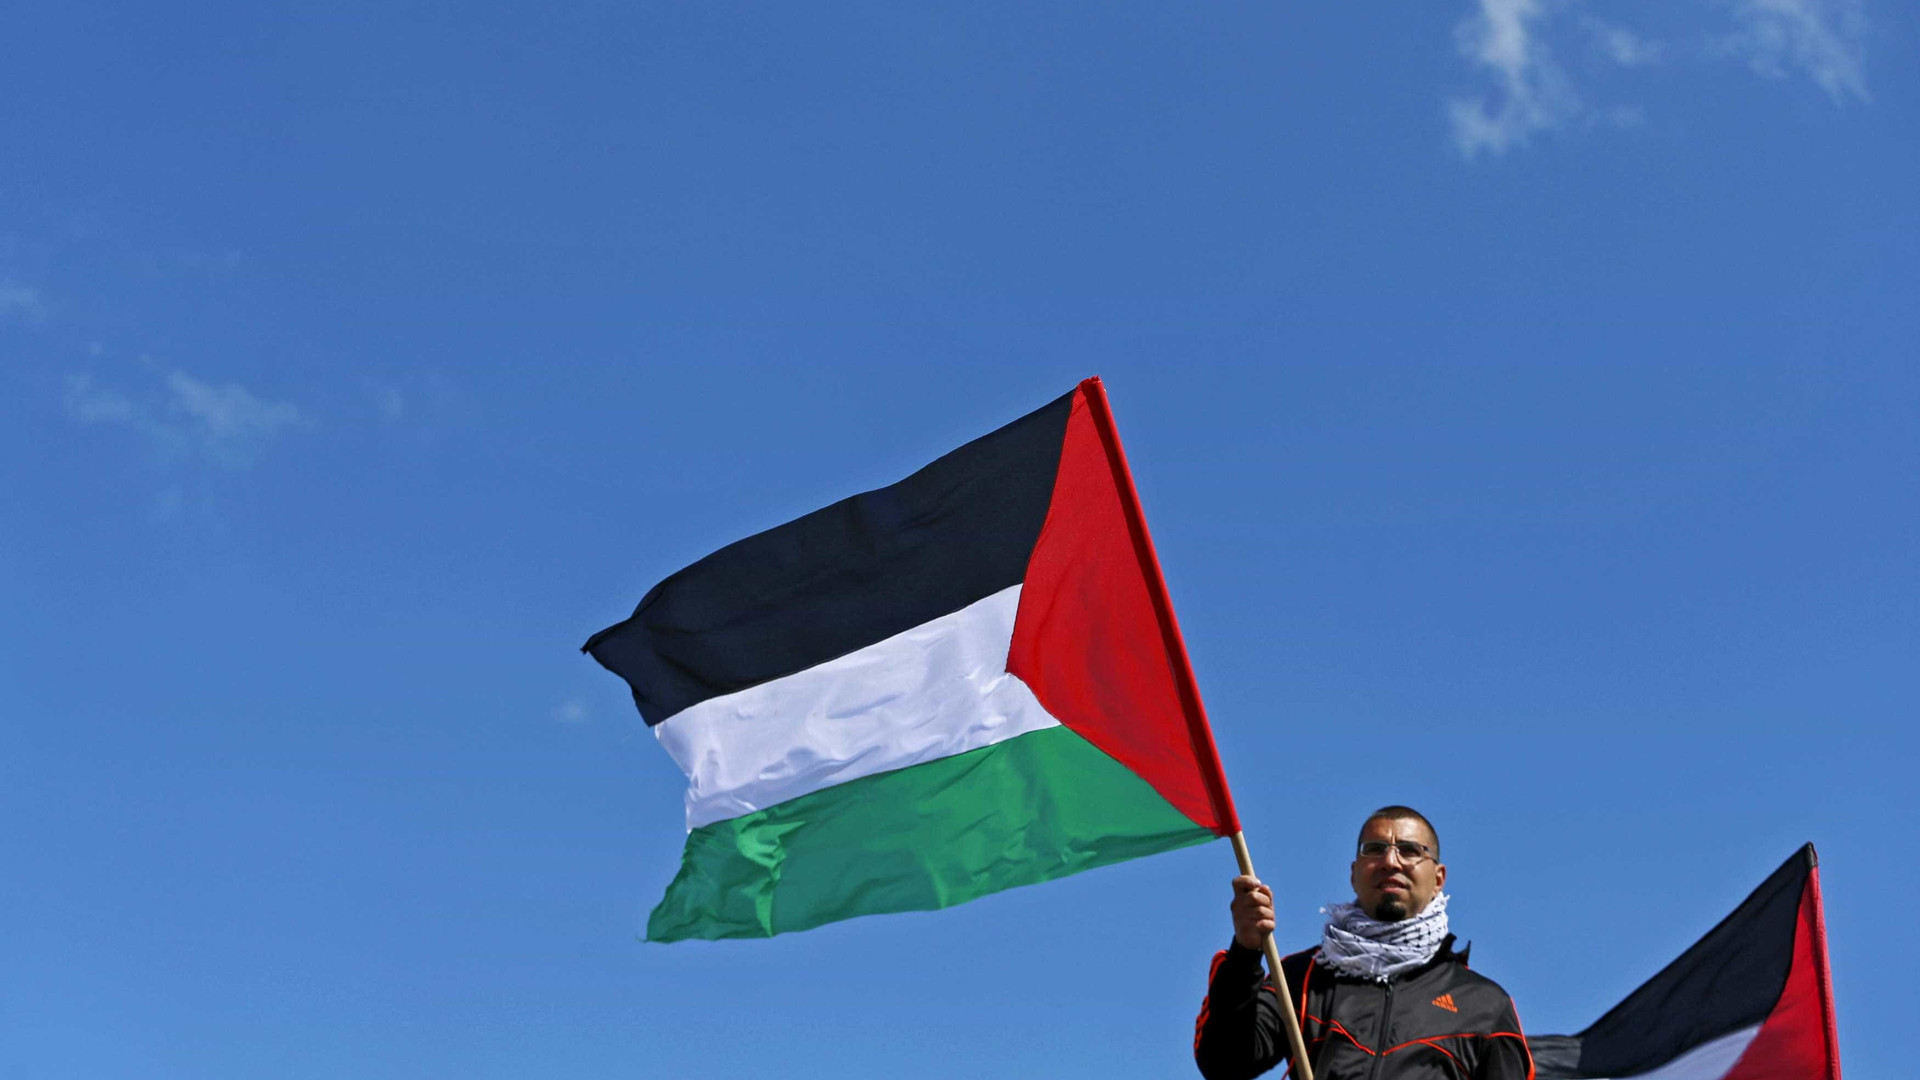 Bandeira palestina é hasteada na sede da ONU pela primeira vez